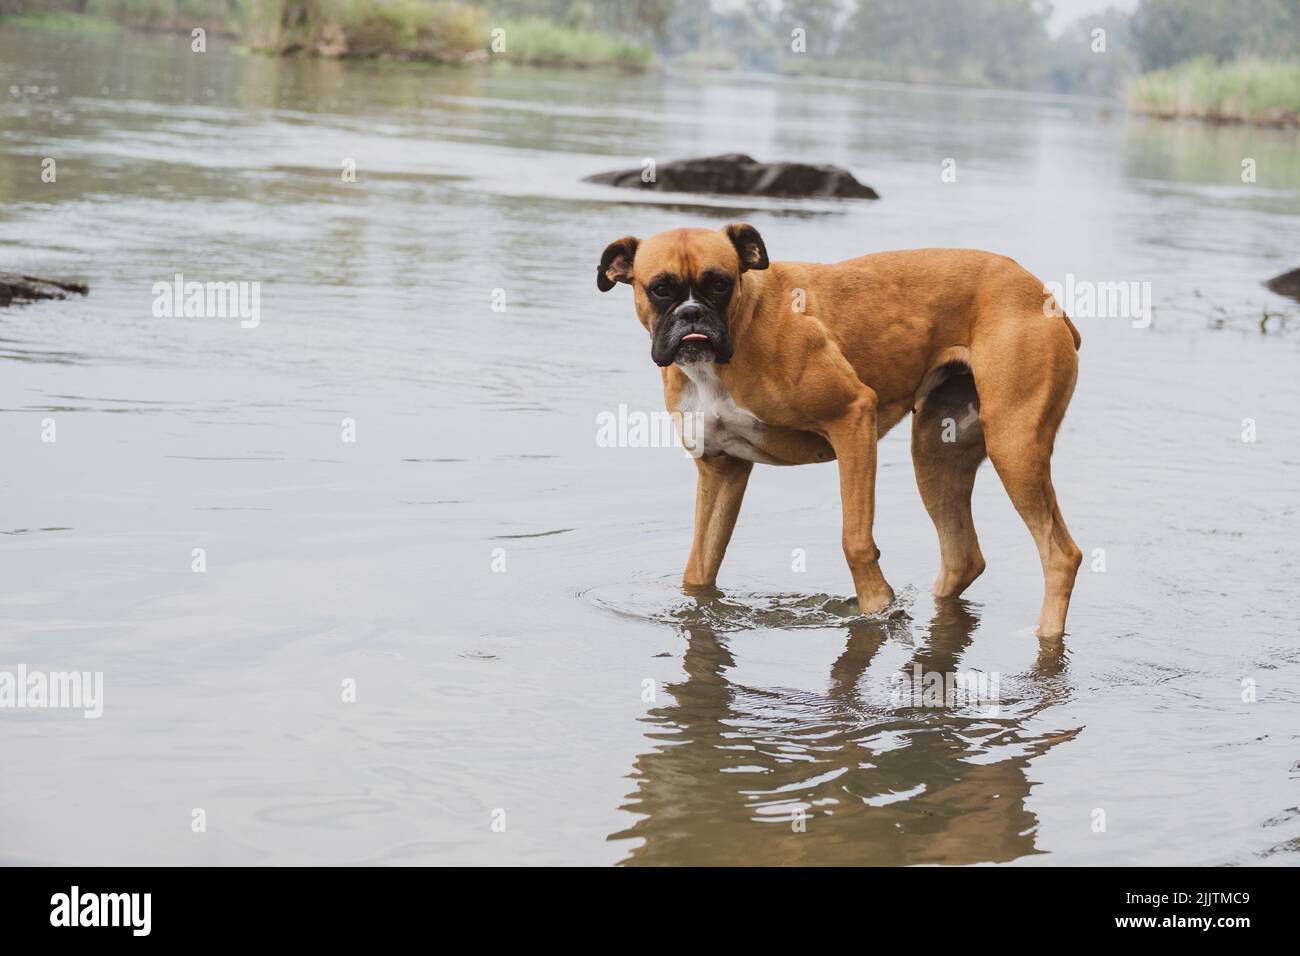 A closeup of a Bullmastiff guard dog in the water Stock Photo